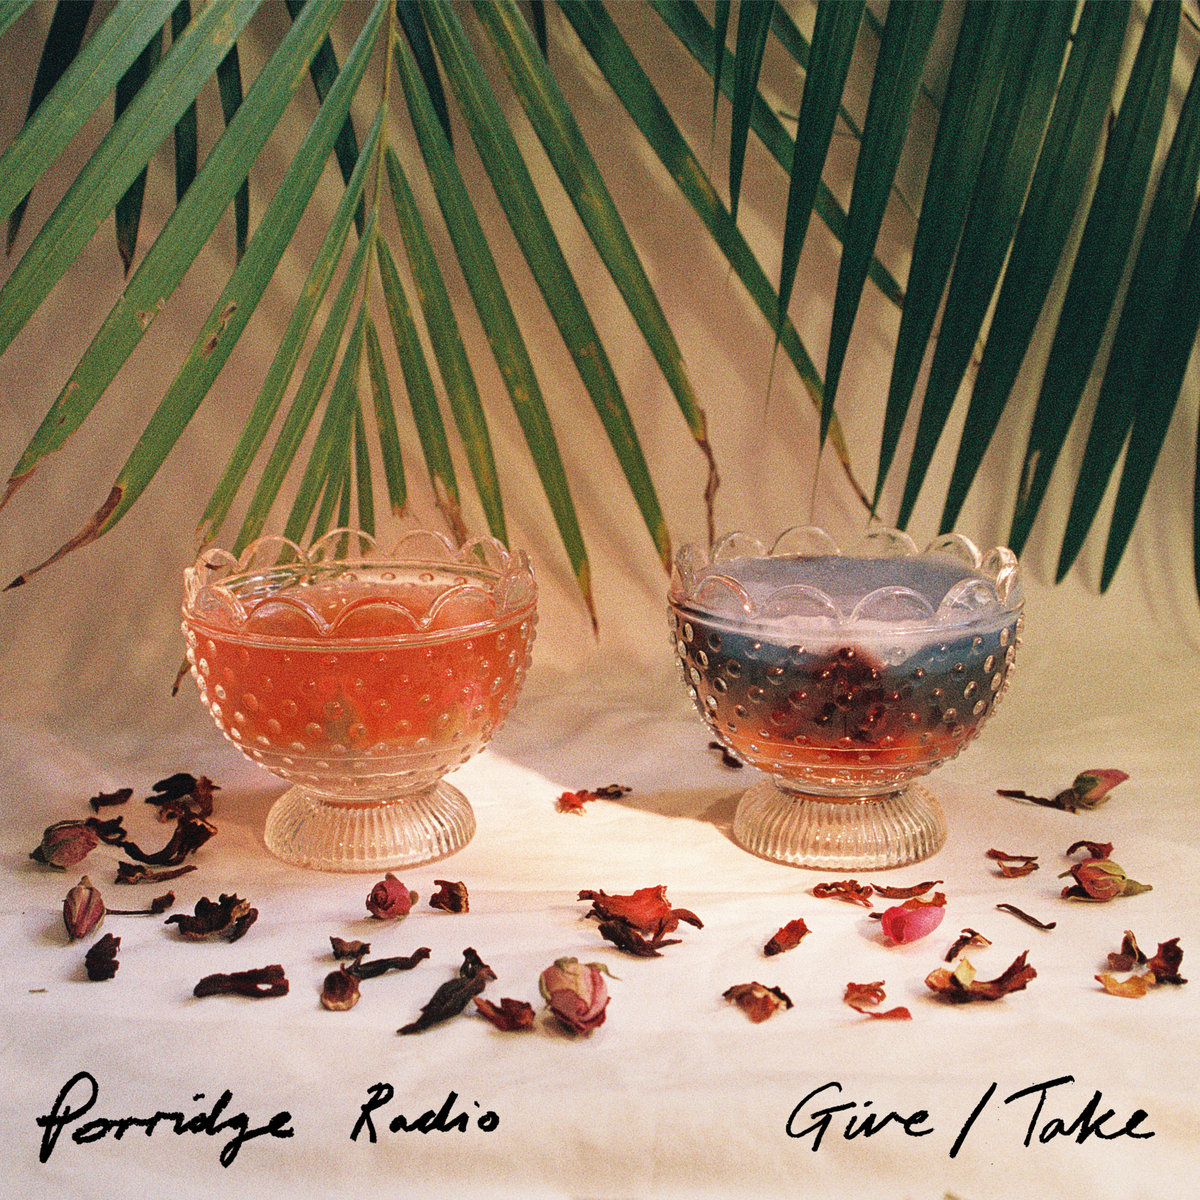 Porridge Radio give take album art